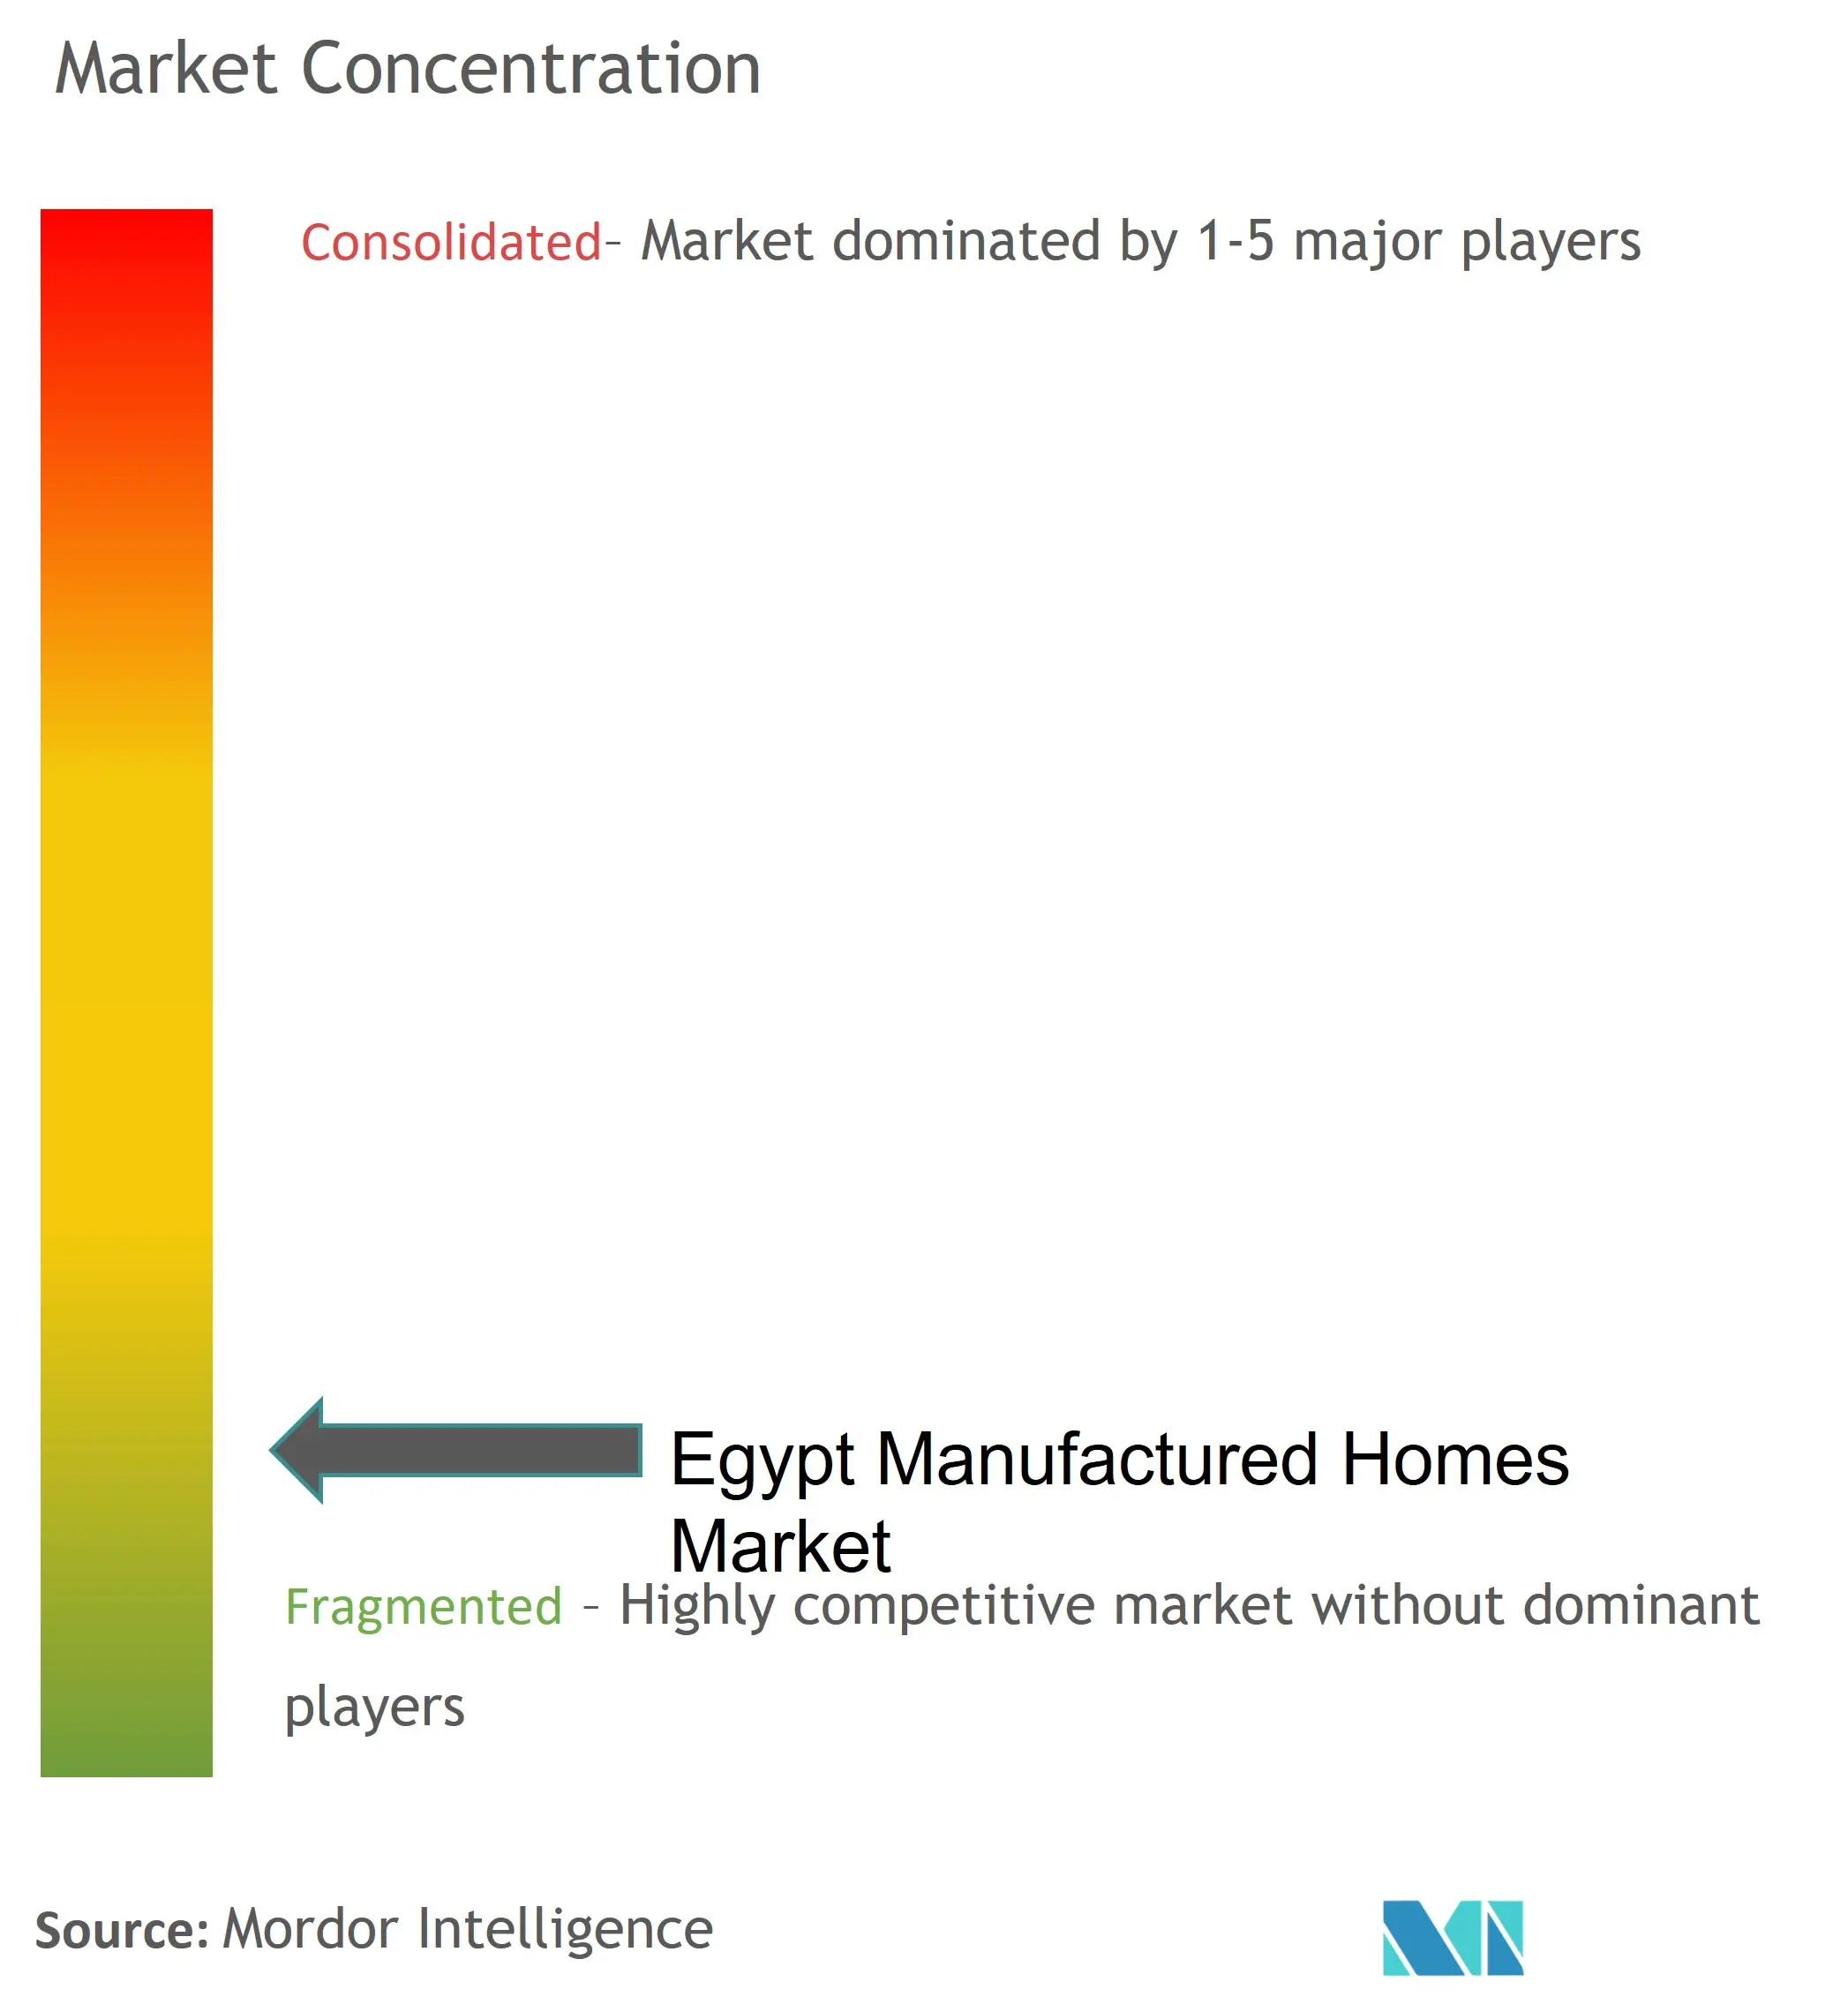 Egypt Manufactured Homes Market Concentration